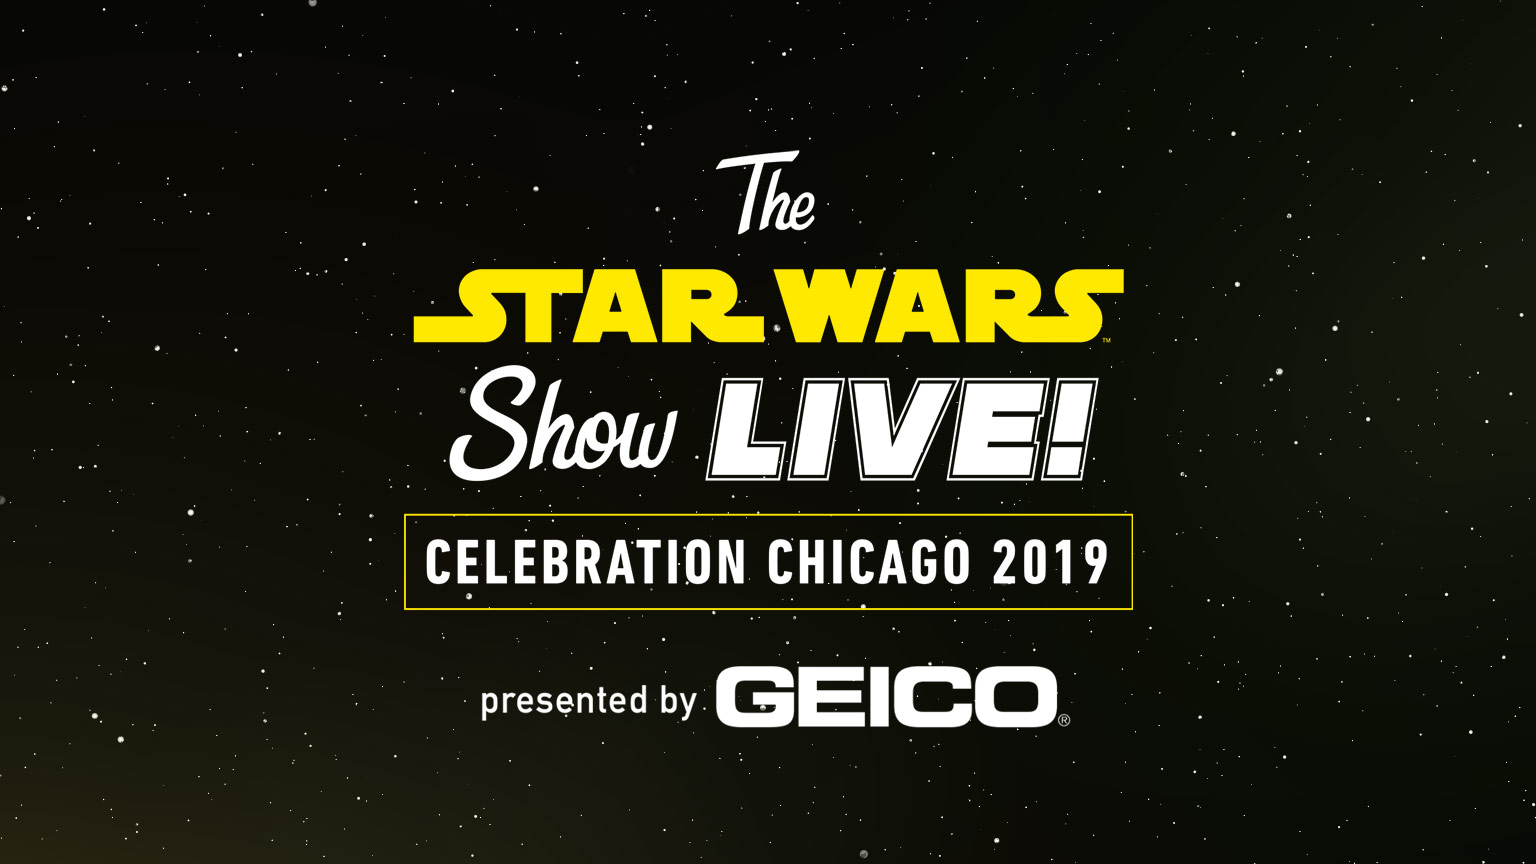 Star Wars Celebration Chicago